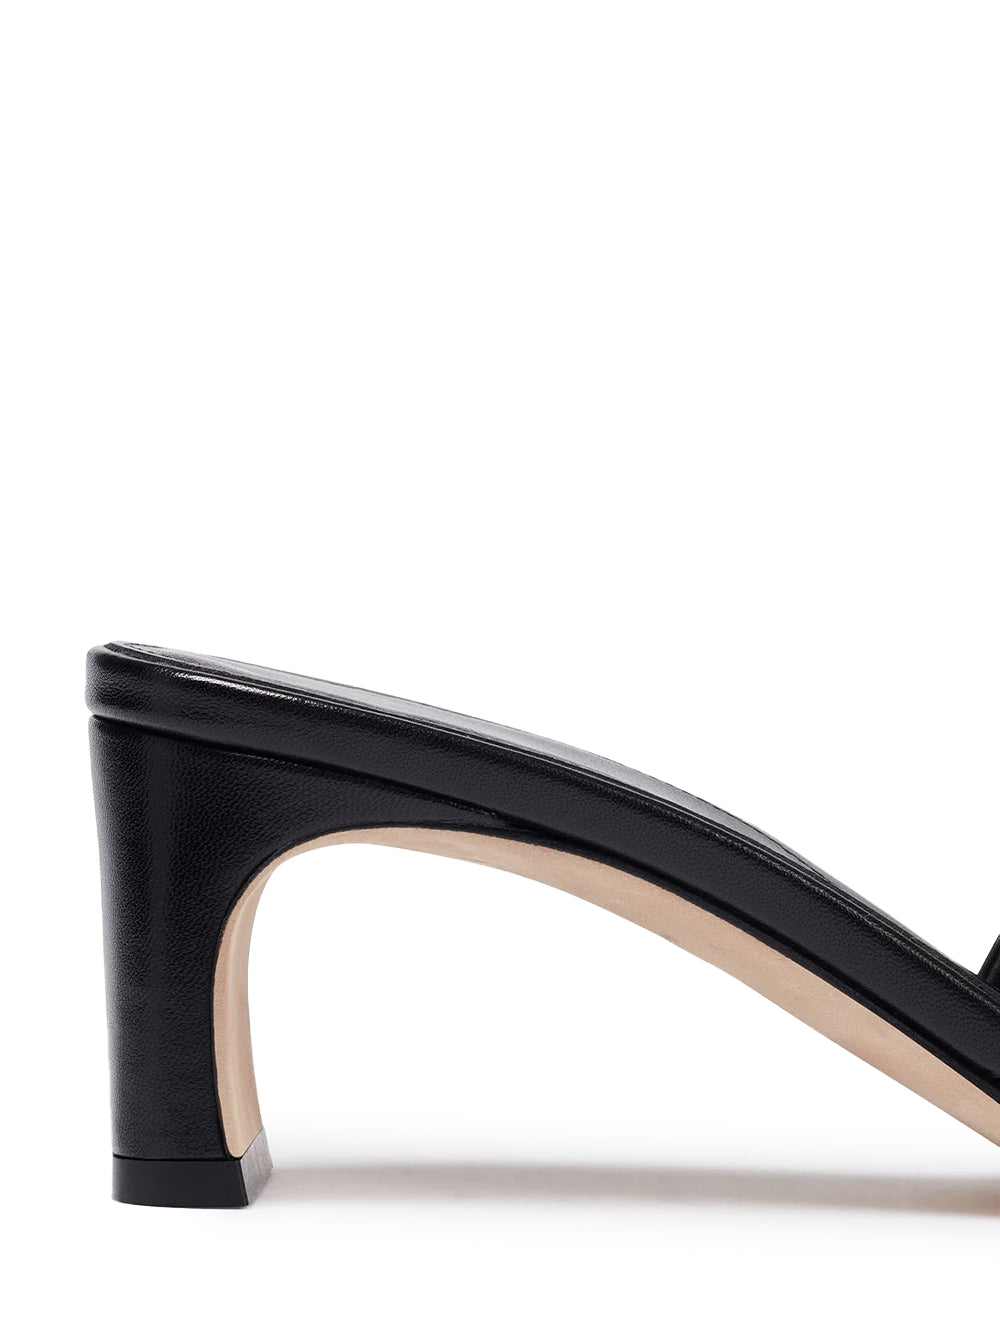 Jeanie Nappa Leather Black Sandals